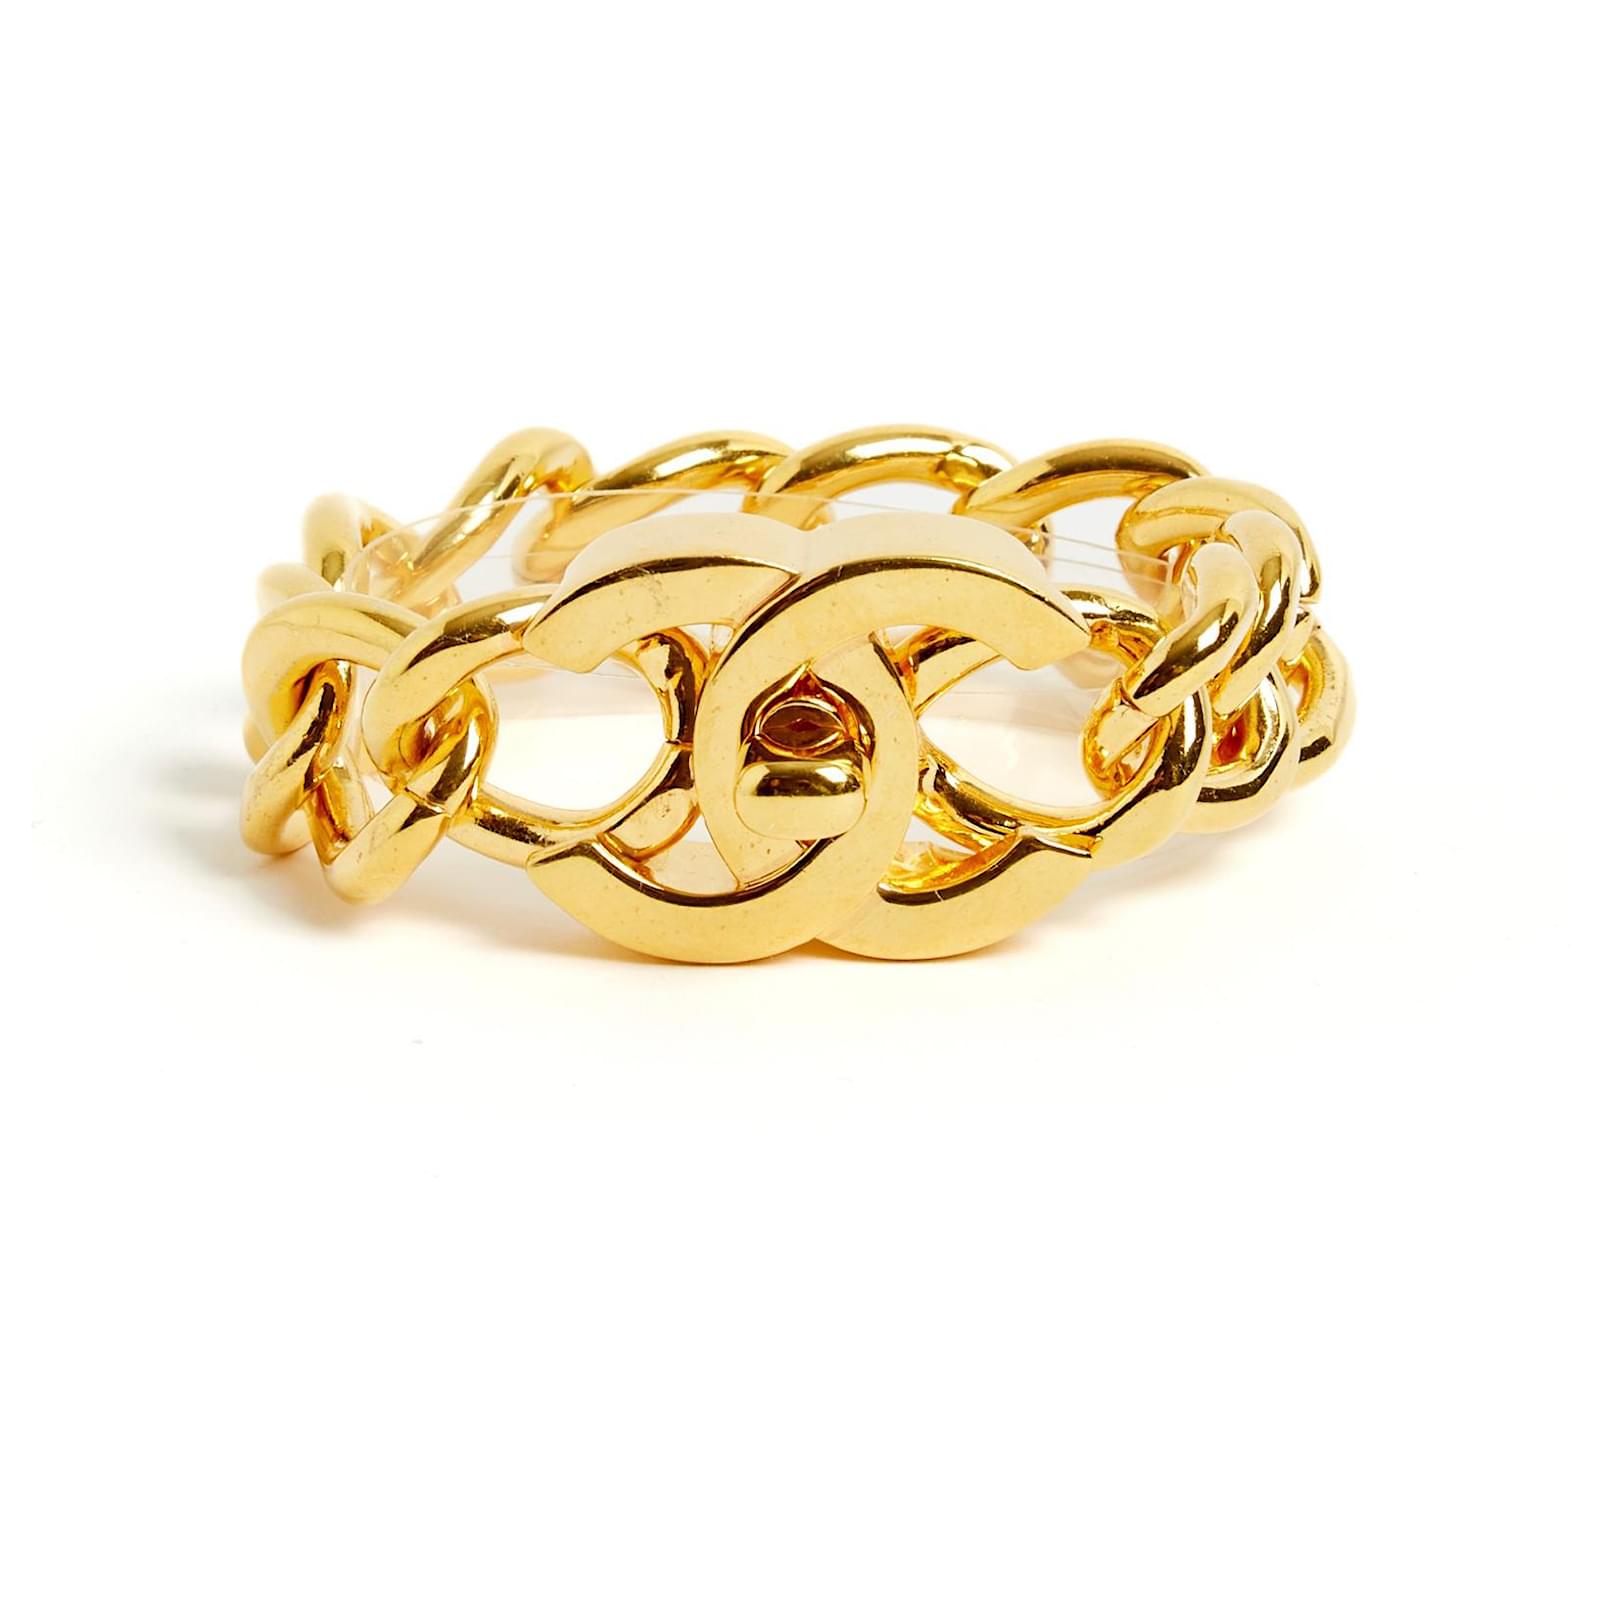 Chanel Cc Turnlock Motif Rhinestone Charm Gold Chain Bracelet 96a